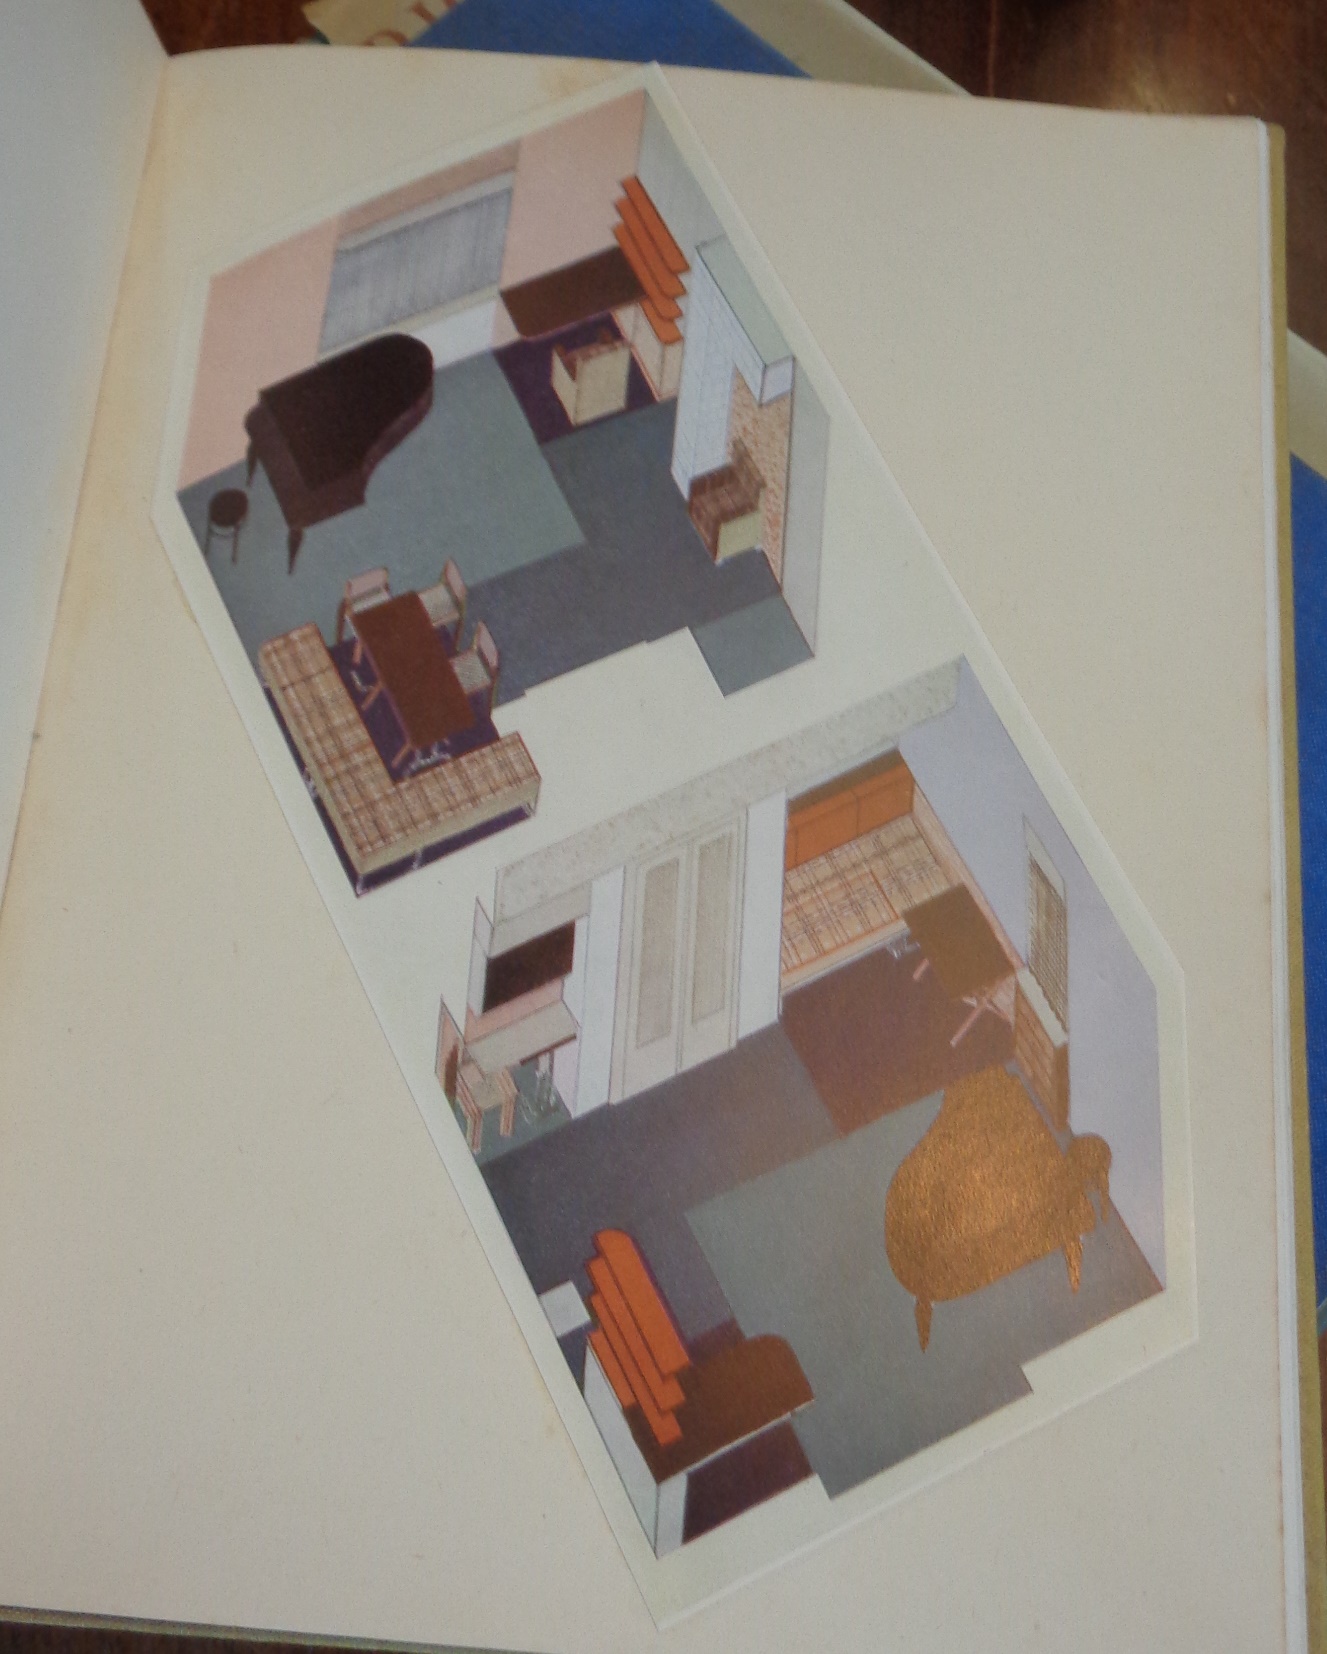 Two 1930's Interior Design books by Derek Patmore, Margaret Jourdan's "English Interior Decoration", - Image 3 of 5